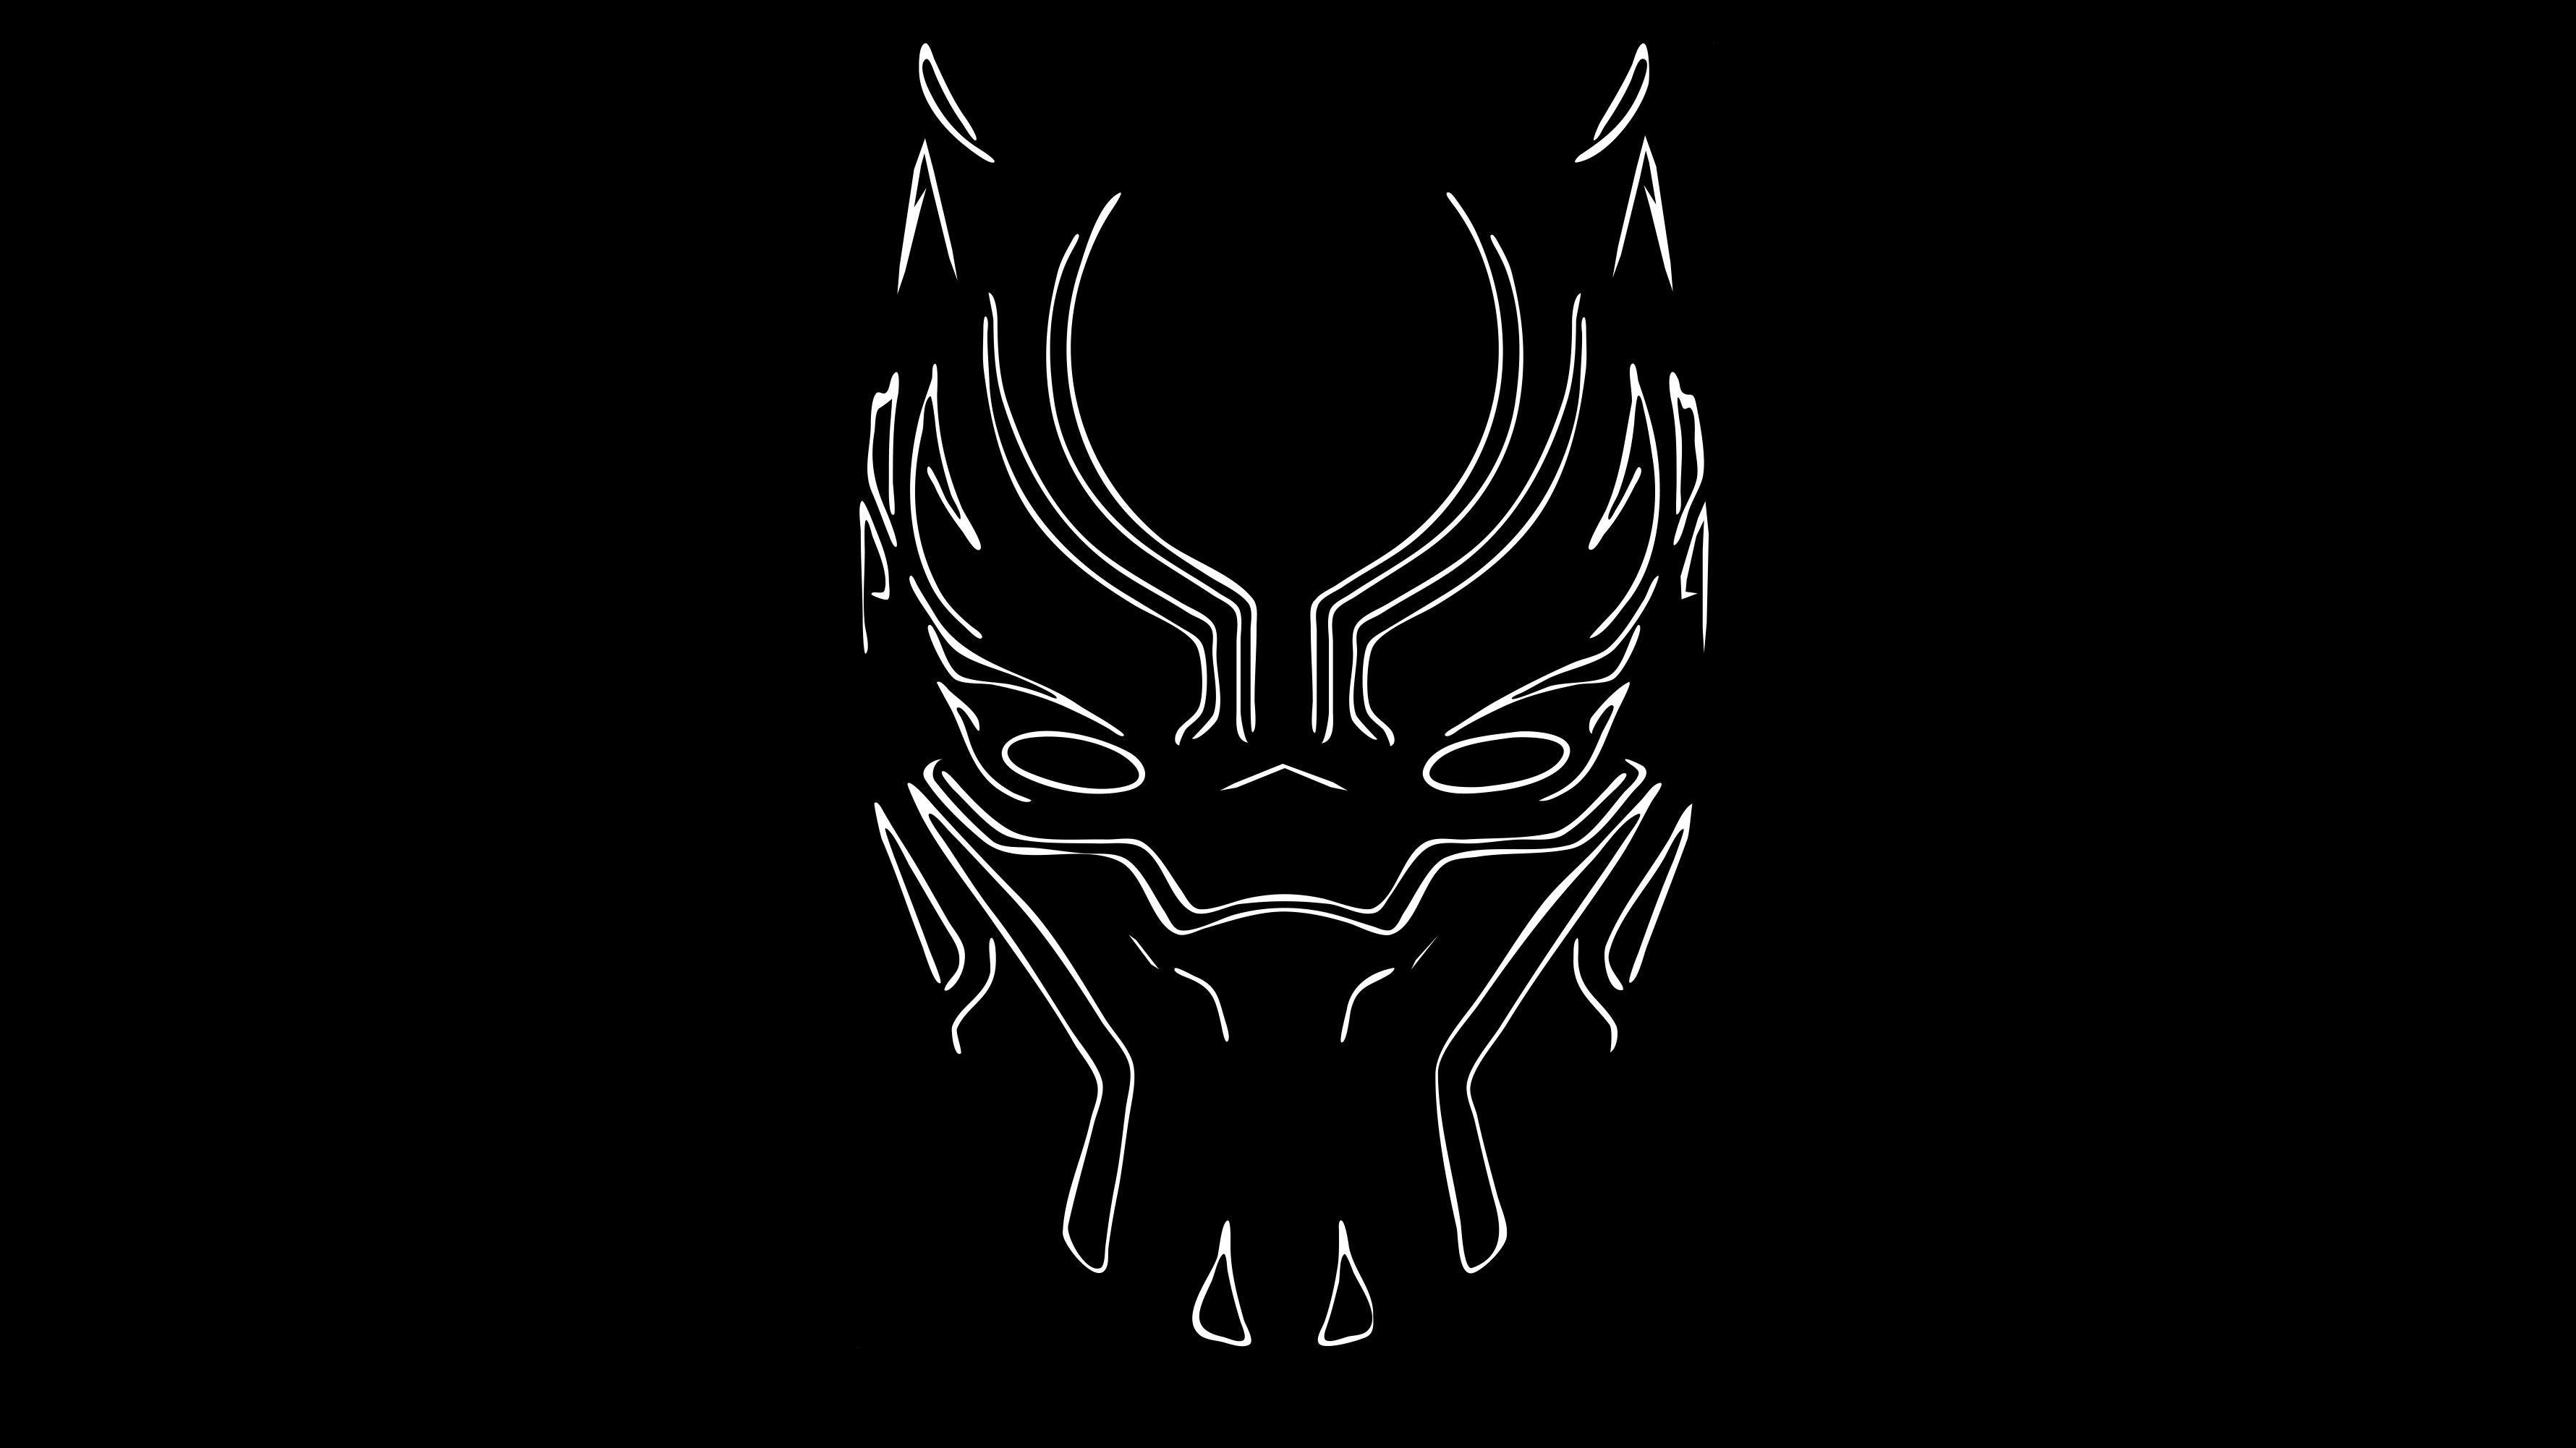  Black  Panther  Logo Wallpapers  Wallpaper  Cave